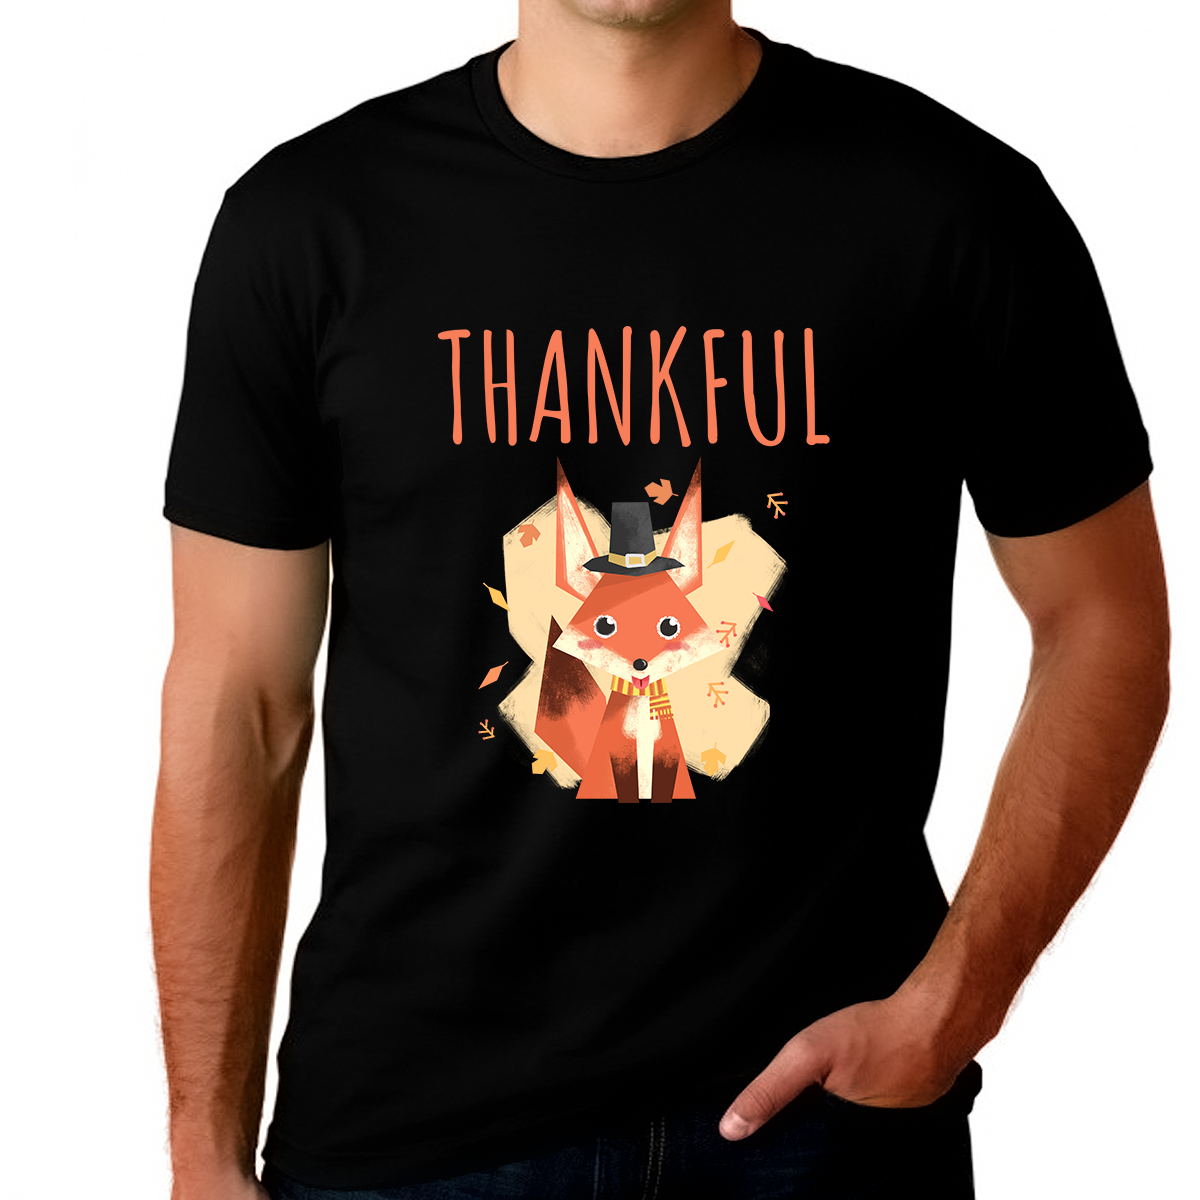 Big and Tall Thanksgiving Shirts for Men Cool Fox Shirt Fall Shirts Men Plus Size Thankful Shirts for Men